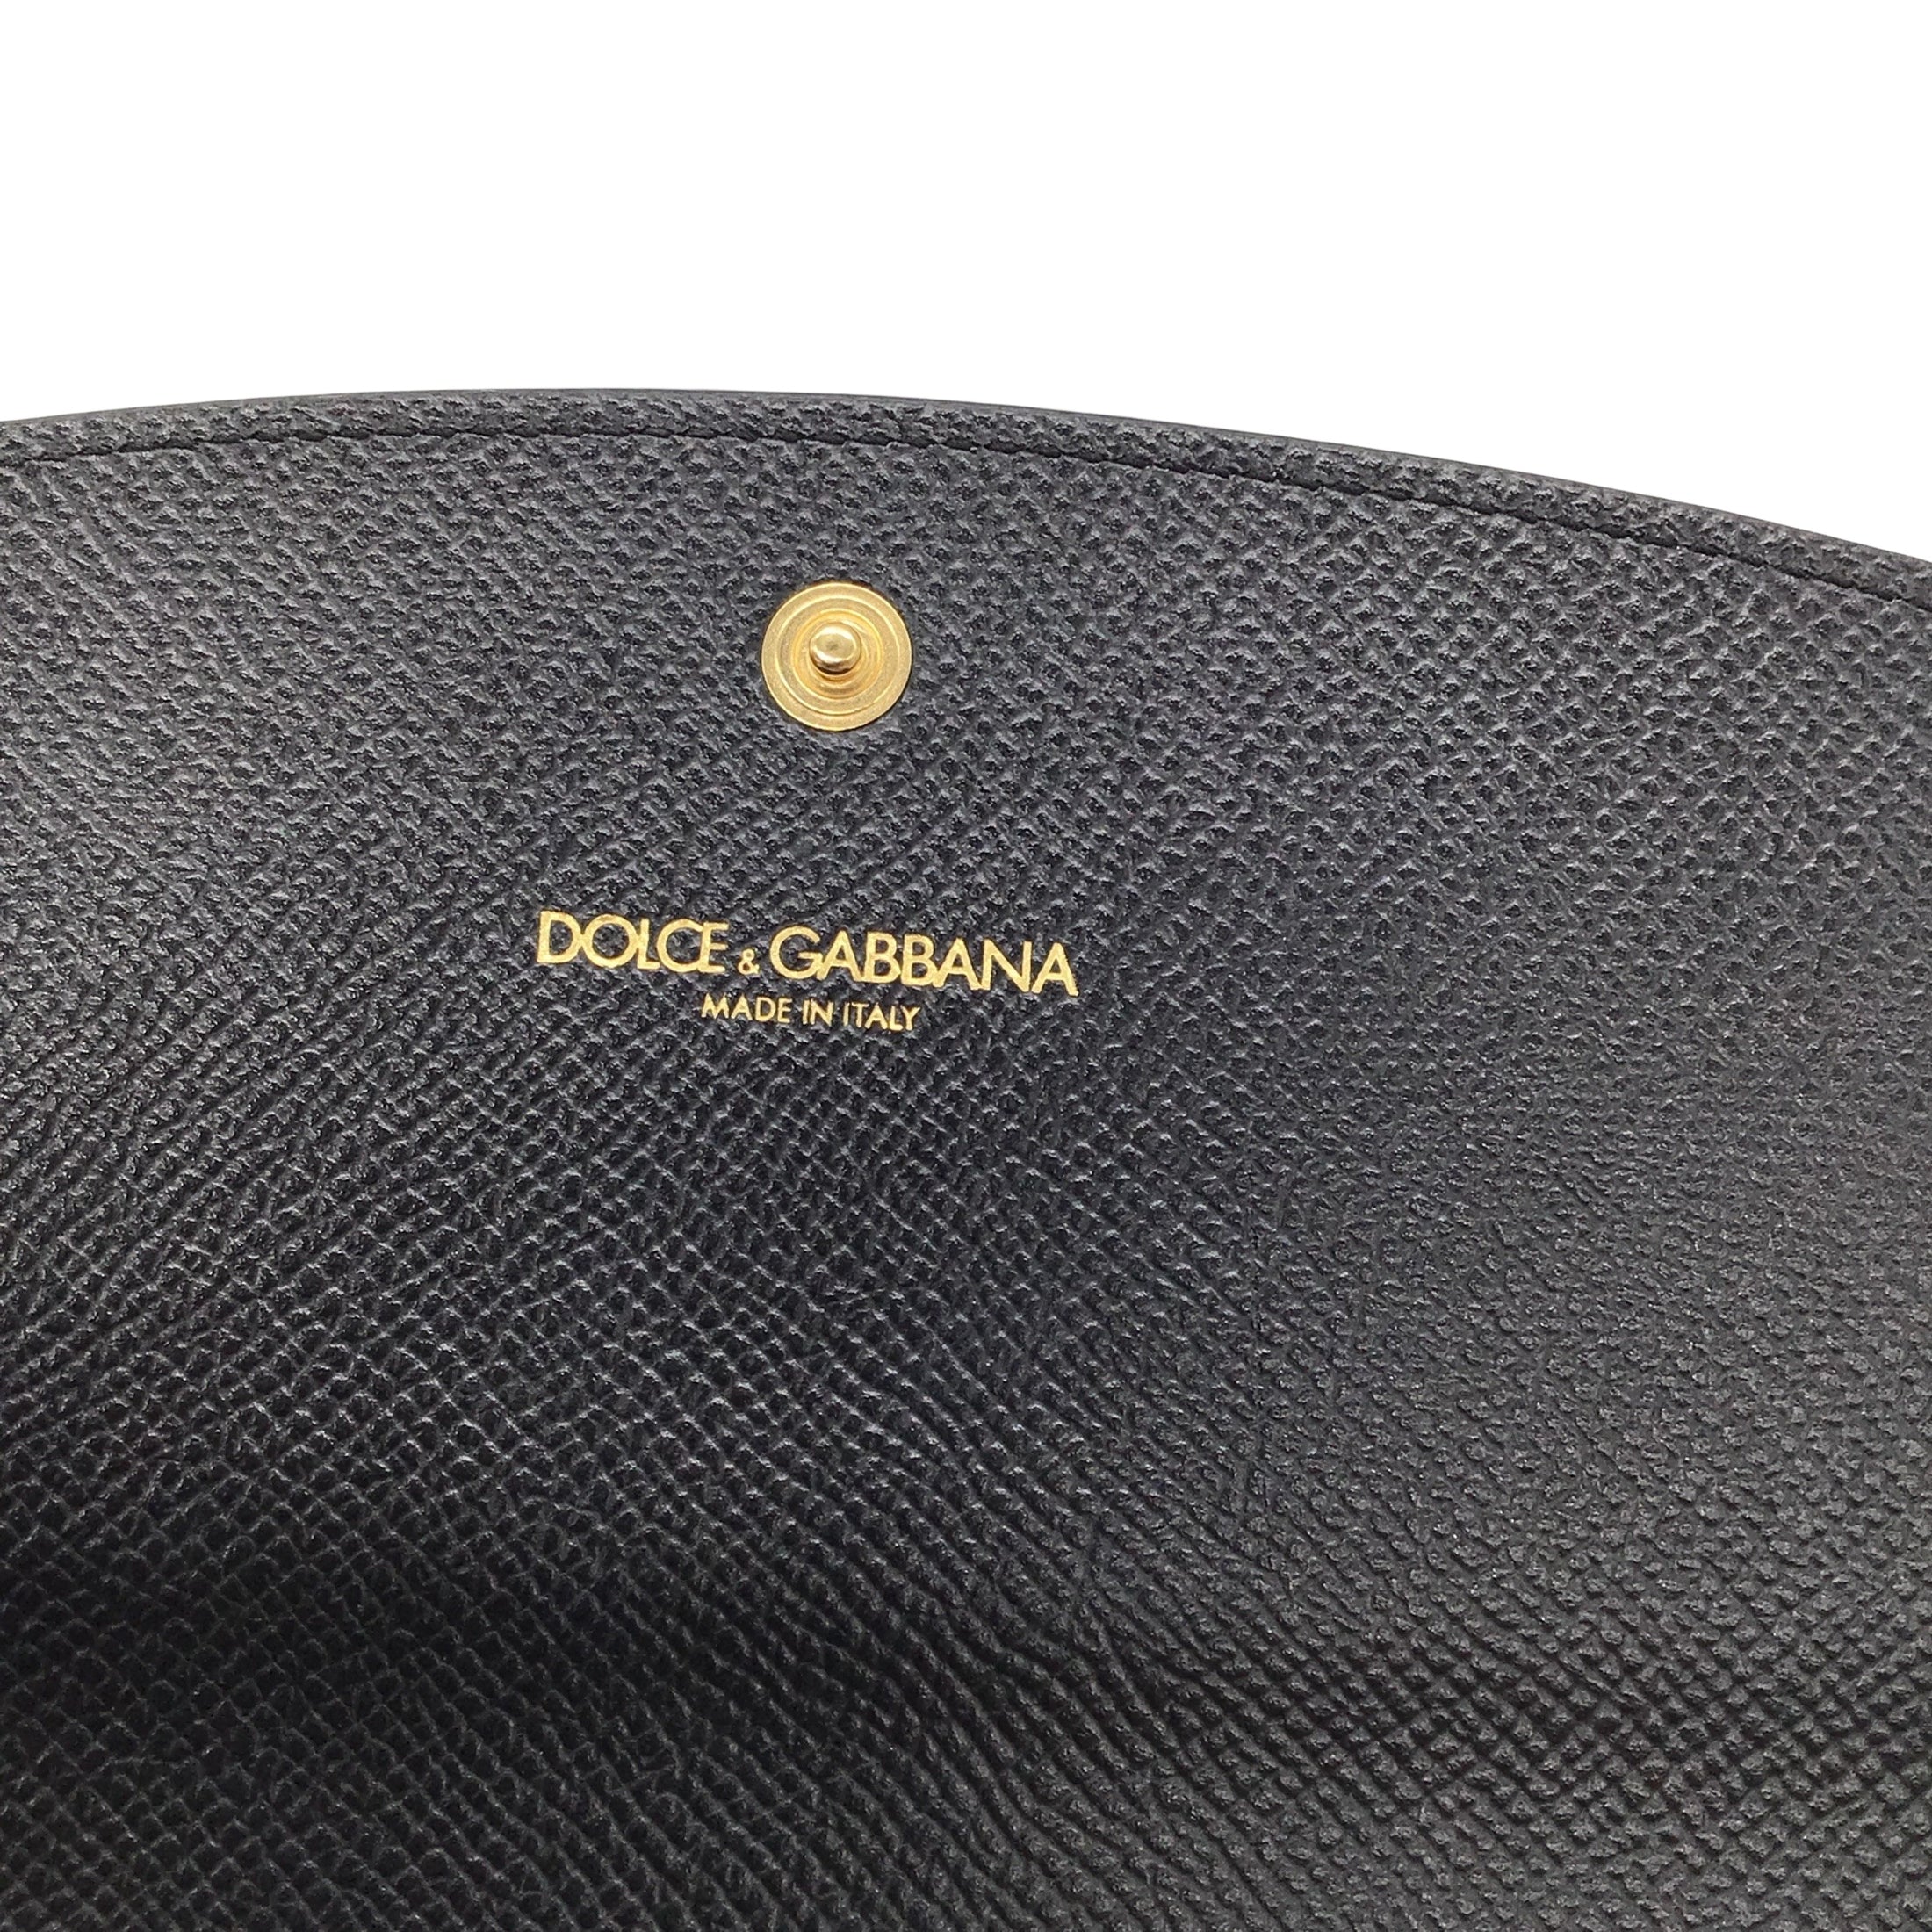 Dolce & Gabbana Dauphine Black Multi Embellished Floral Printed Calfskin Leather Clutch / Crossbody Bag